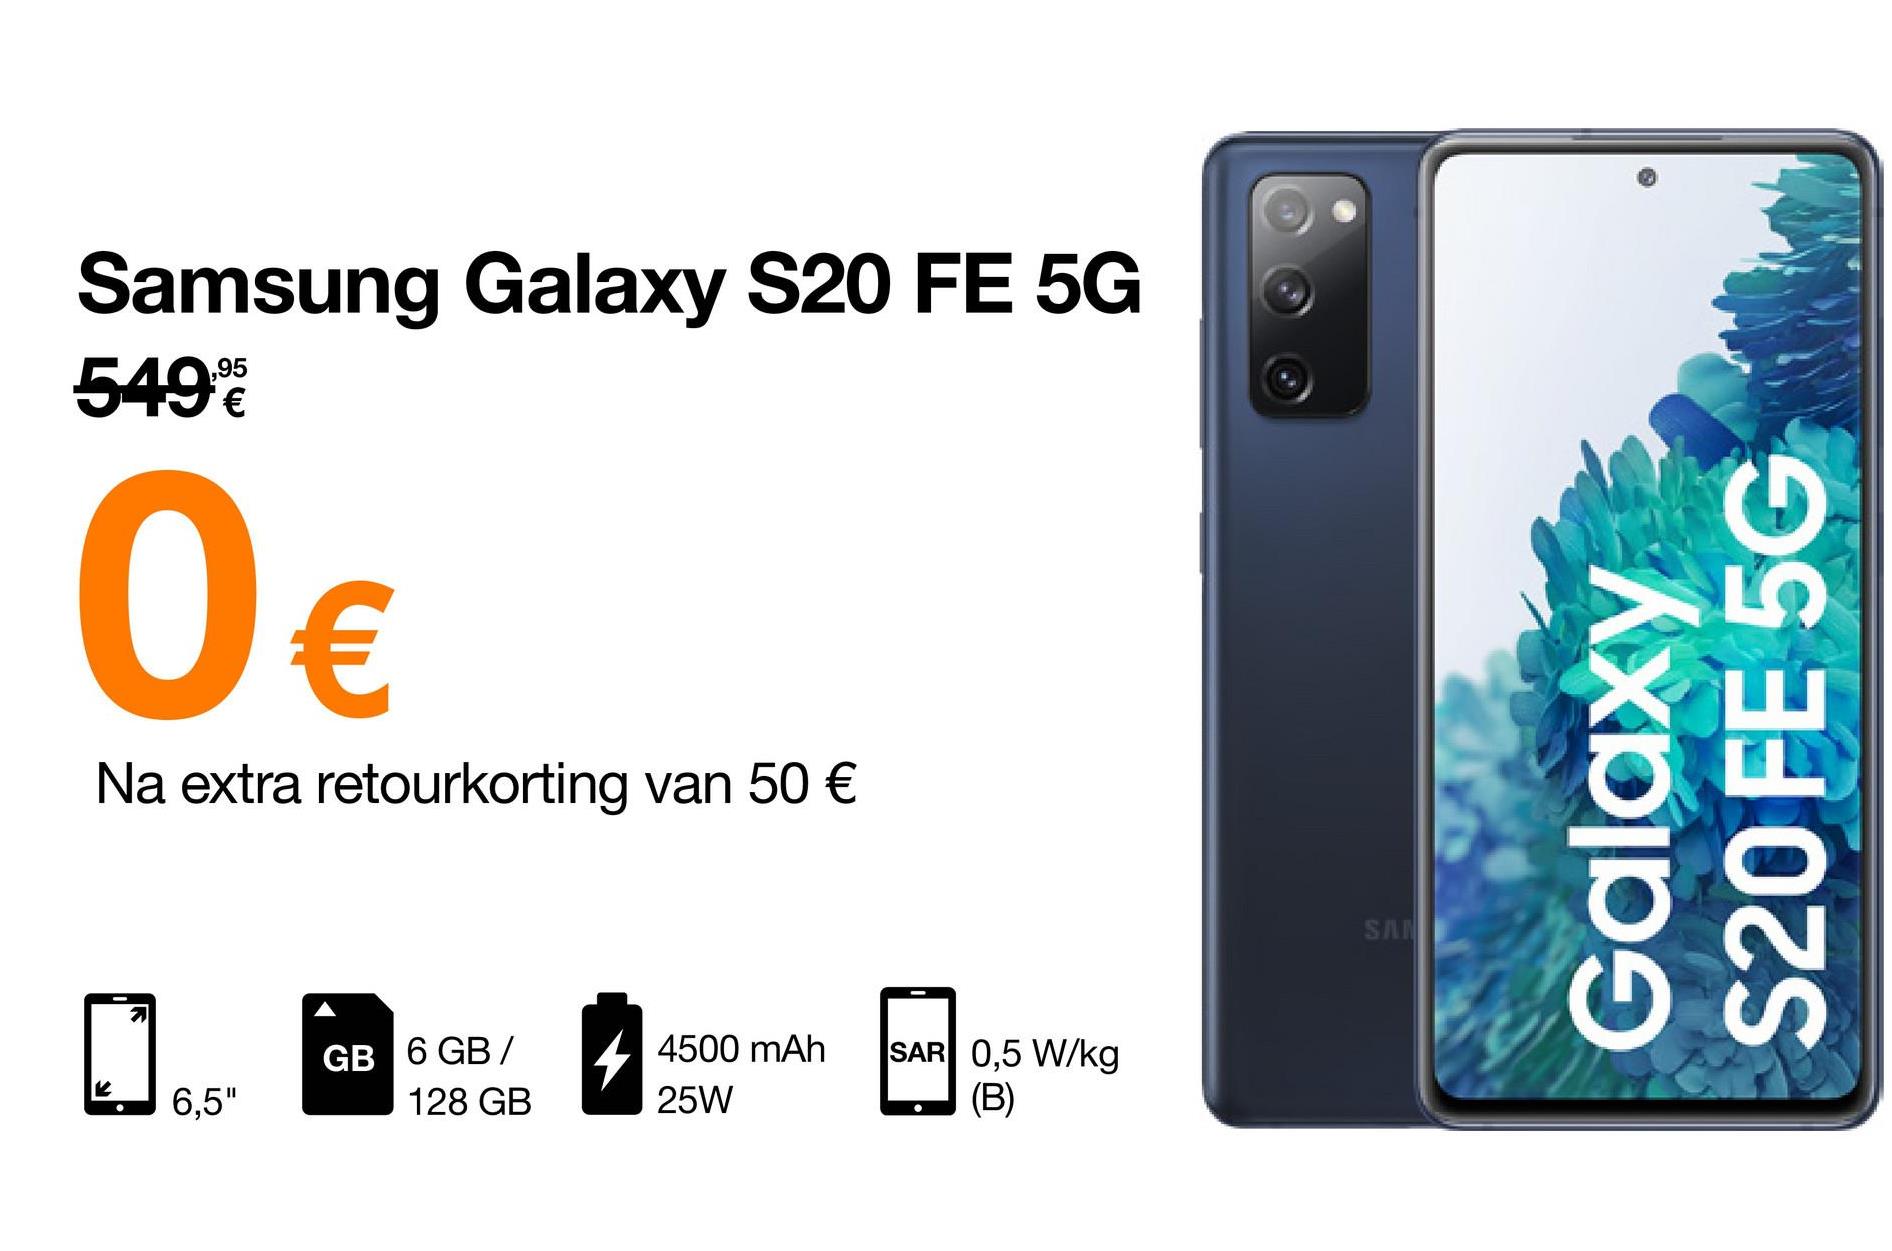 Samsung Galaxy S20 FE 5G
549%
0€
Na extra retourkorting van 50 €
GB 6 GB/
4500 mAh
128 GB
25W
K
6,5"
SAR 0,5 W/kg
(B)
SAN
Galaxy
S20 FE 5G